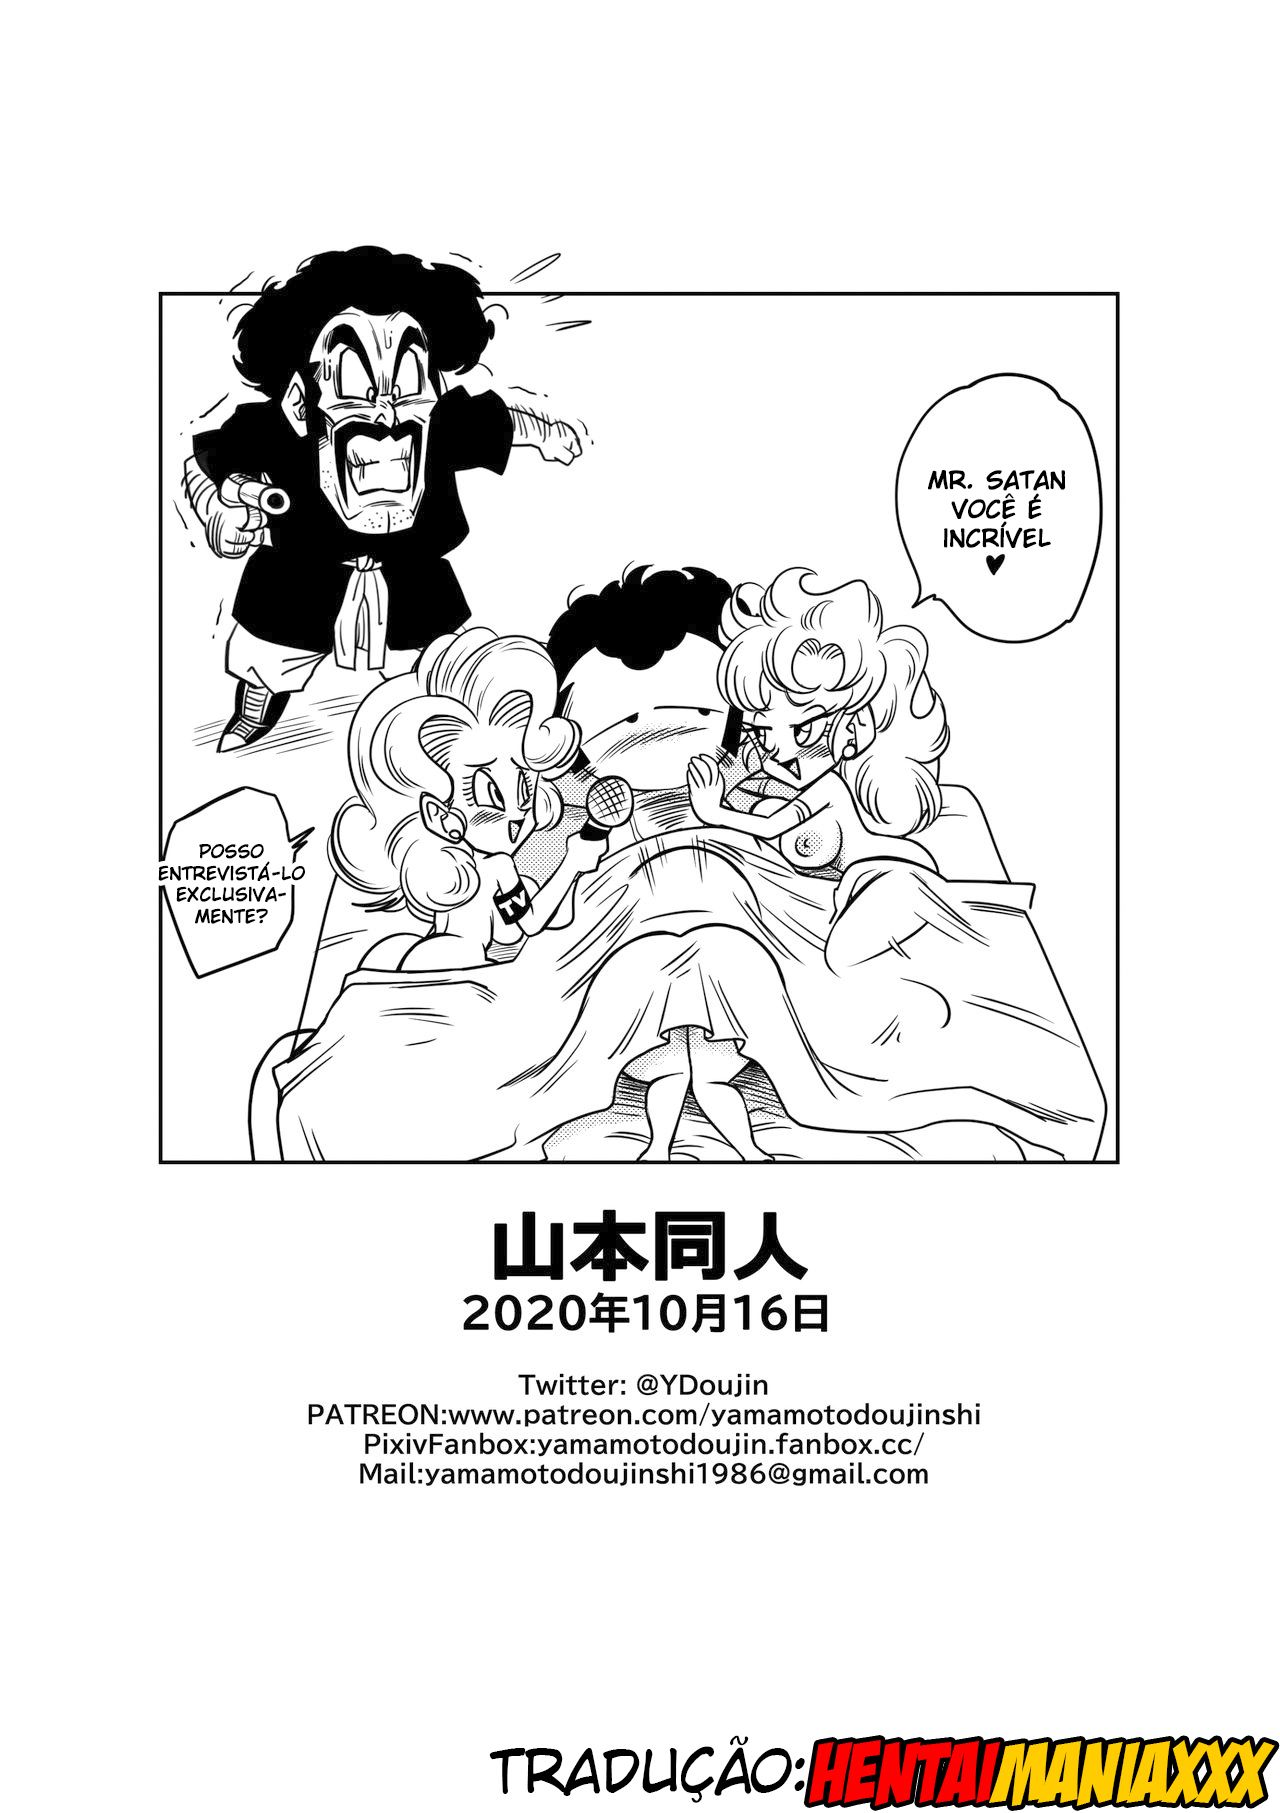 Dragon Ball Z Hentai: Mr. Satan fodendo - Foto 20